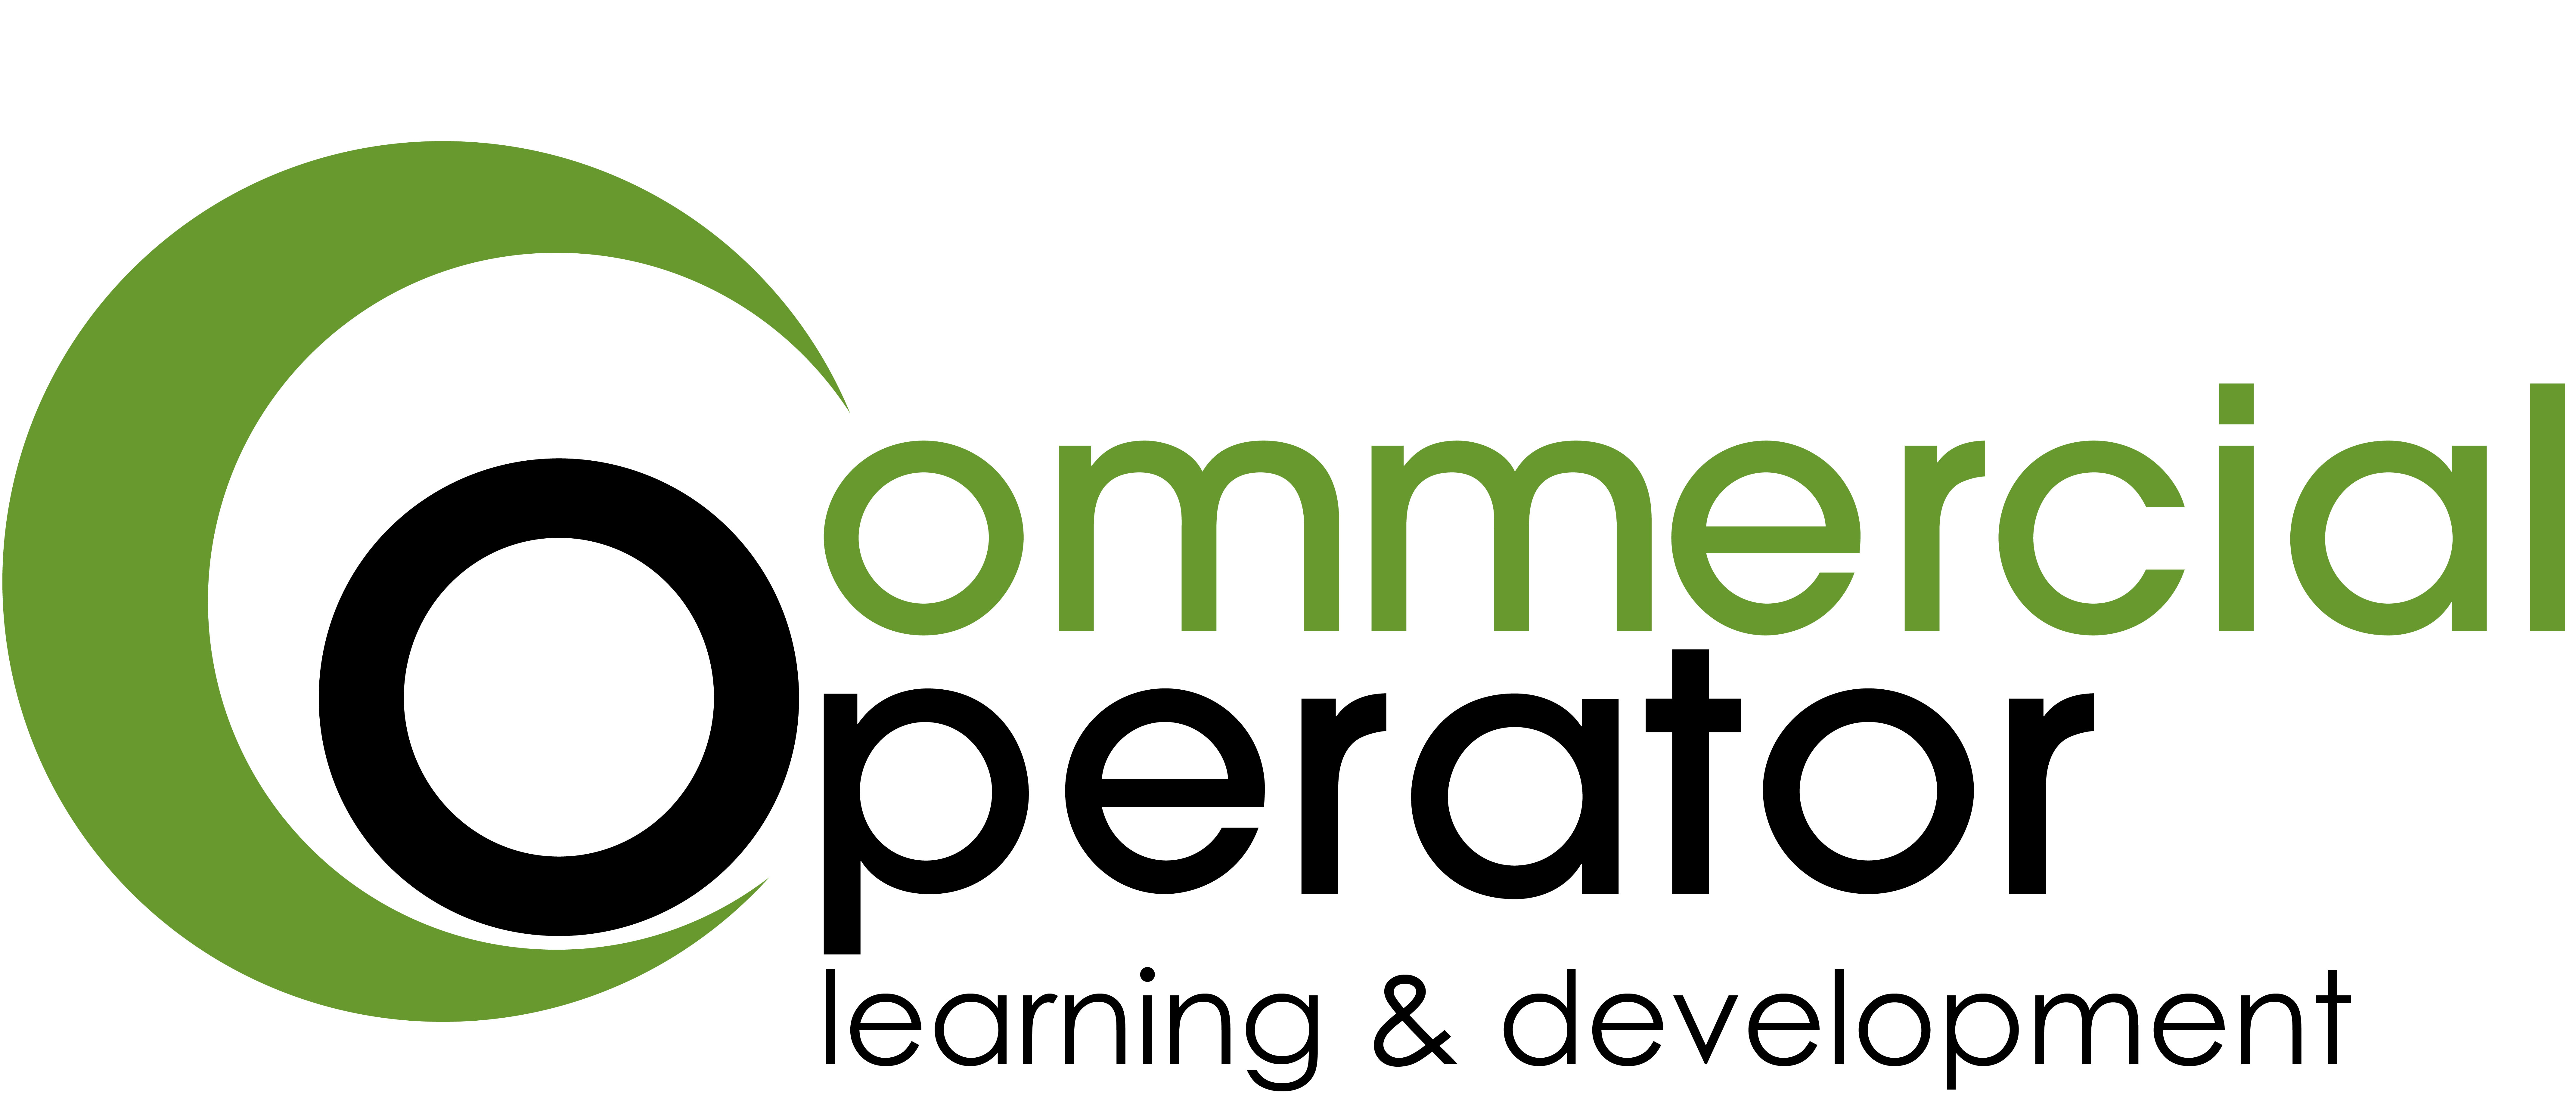 Commercial Operator logo